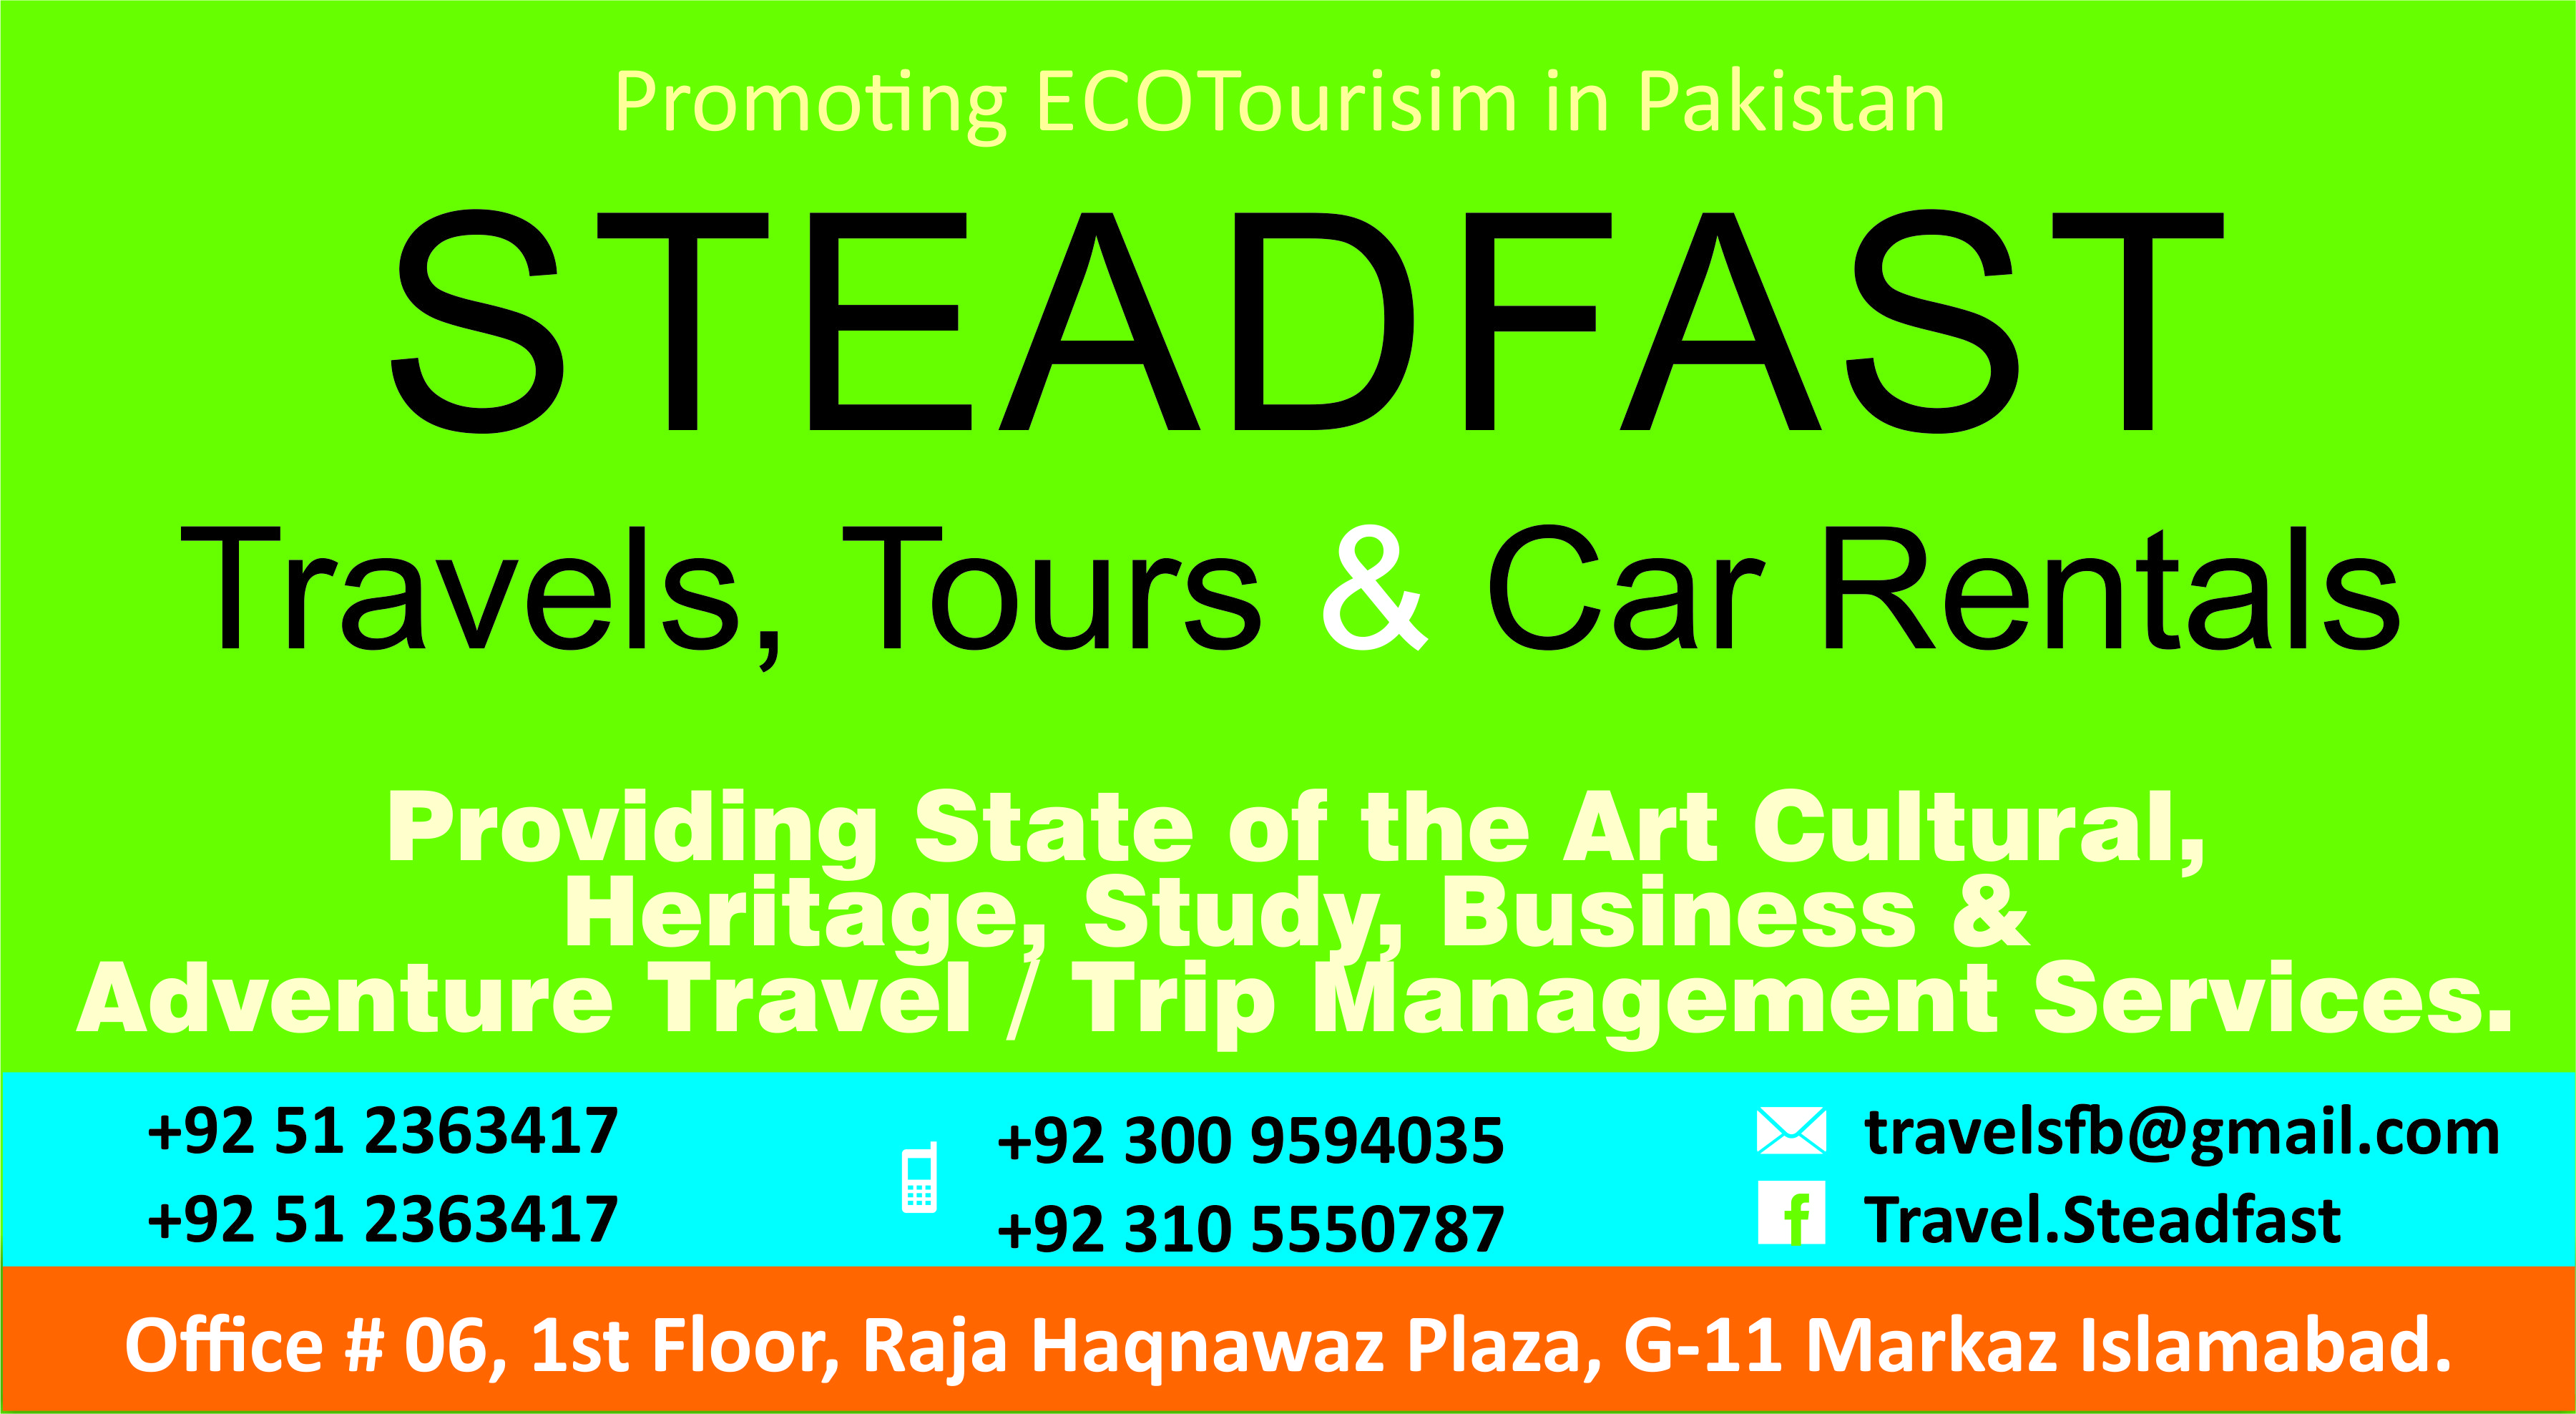 Steadfast Travel, Tours & Car Rental